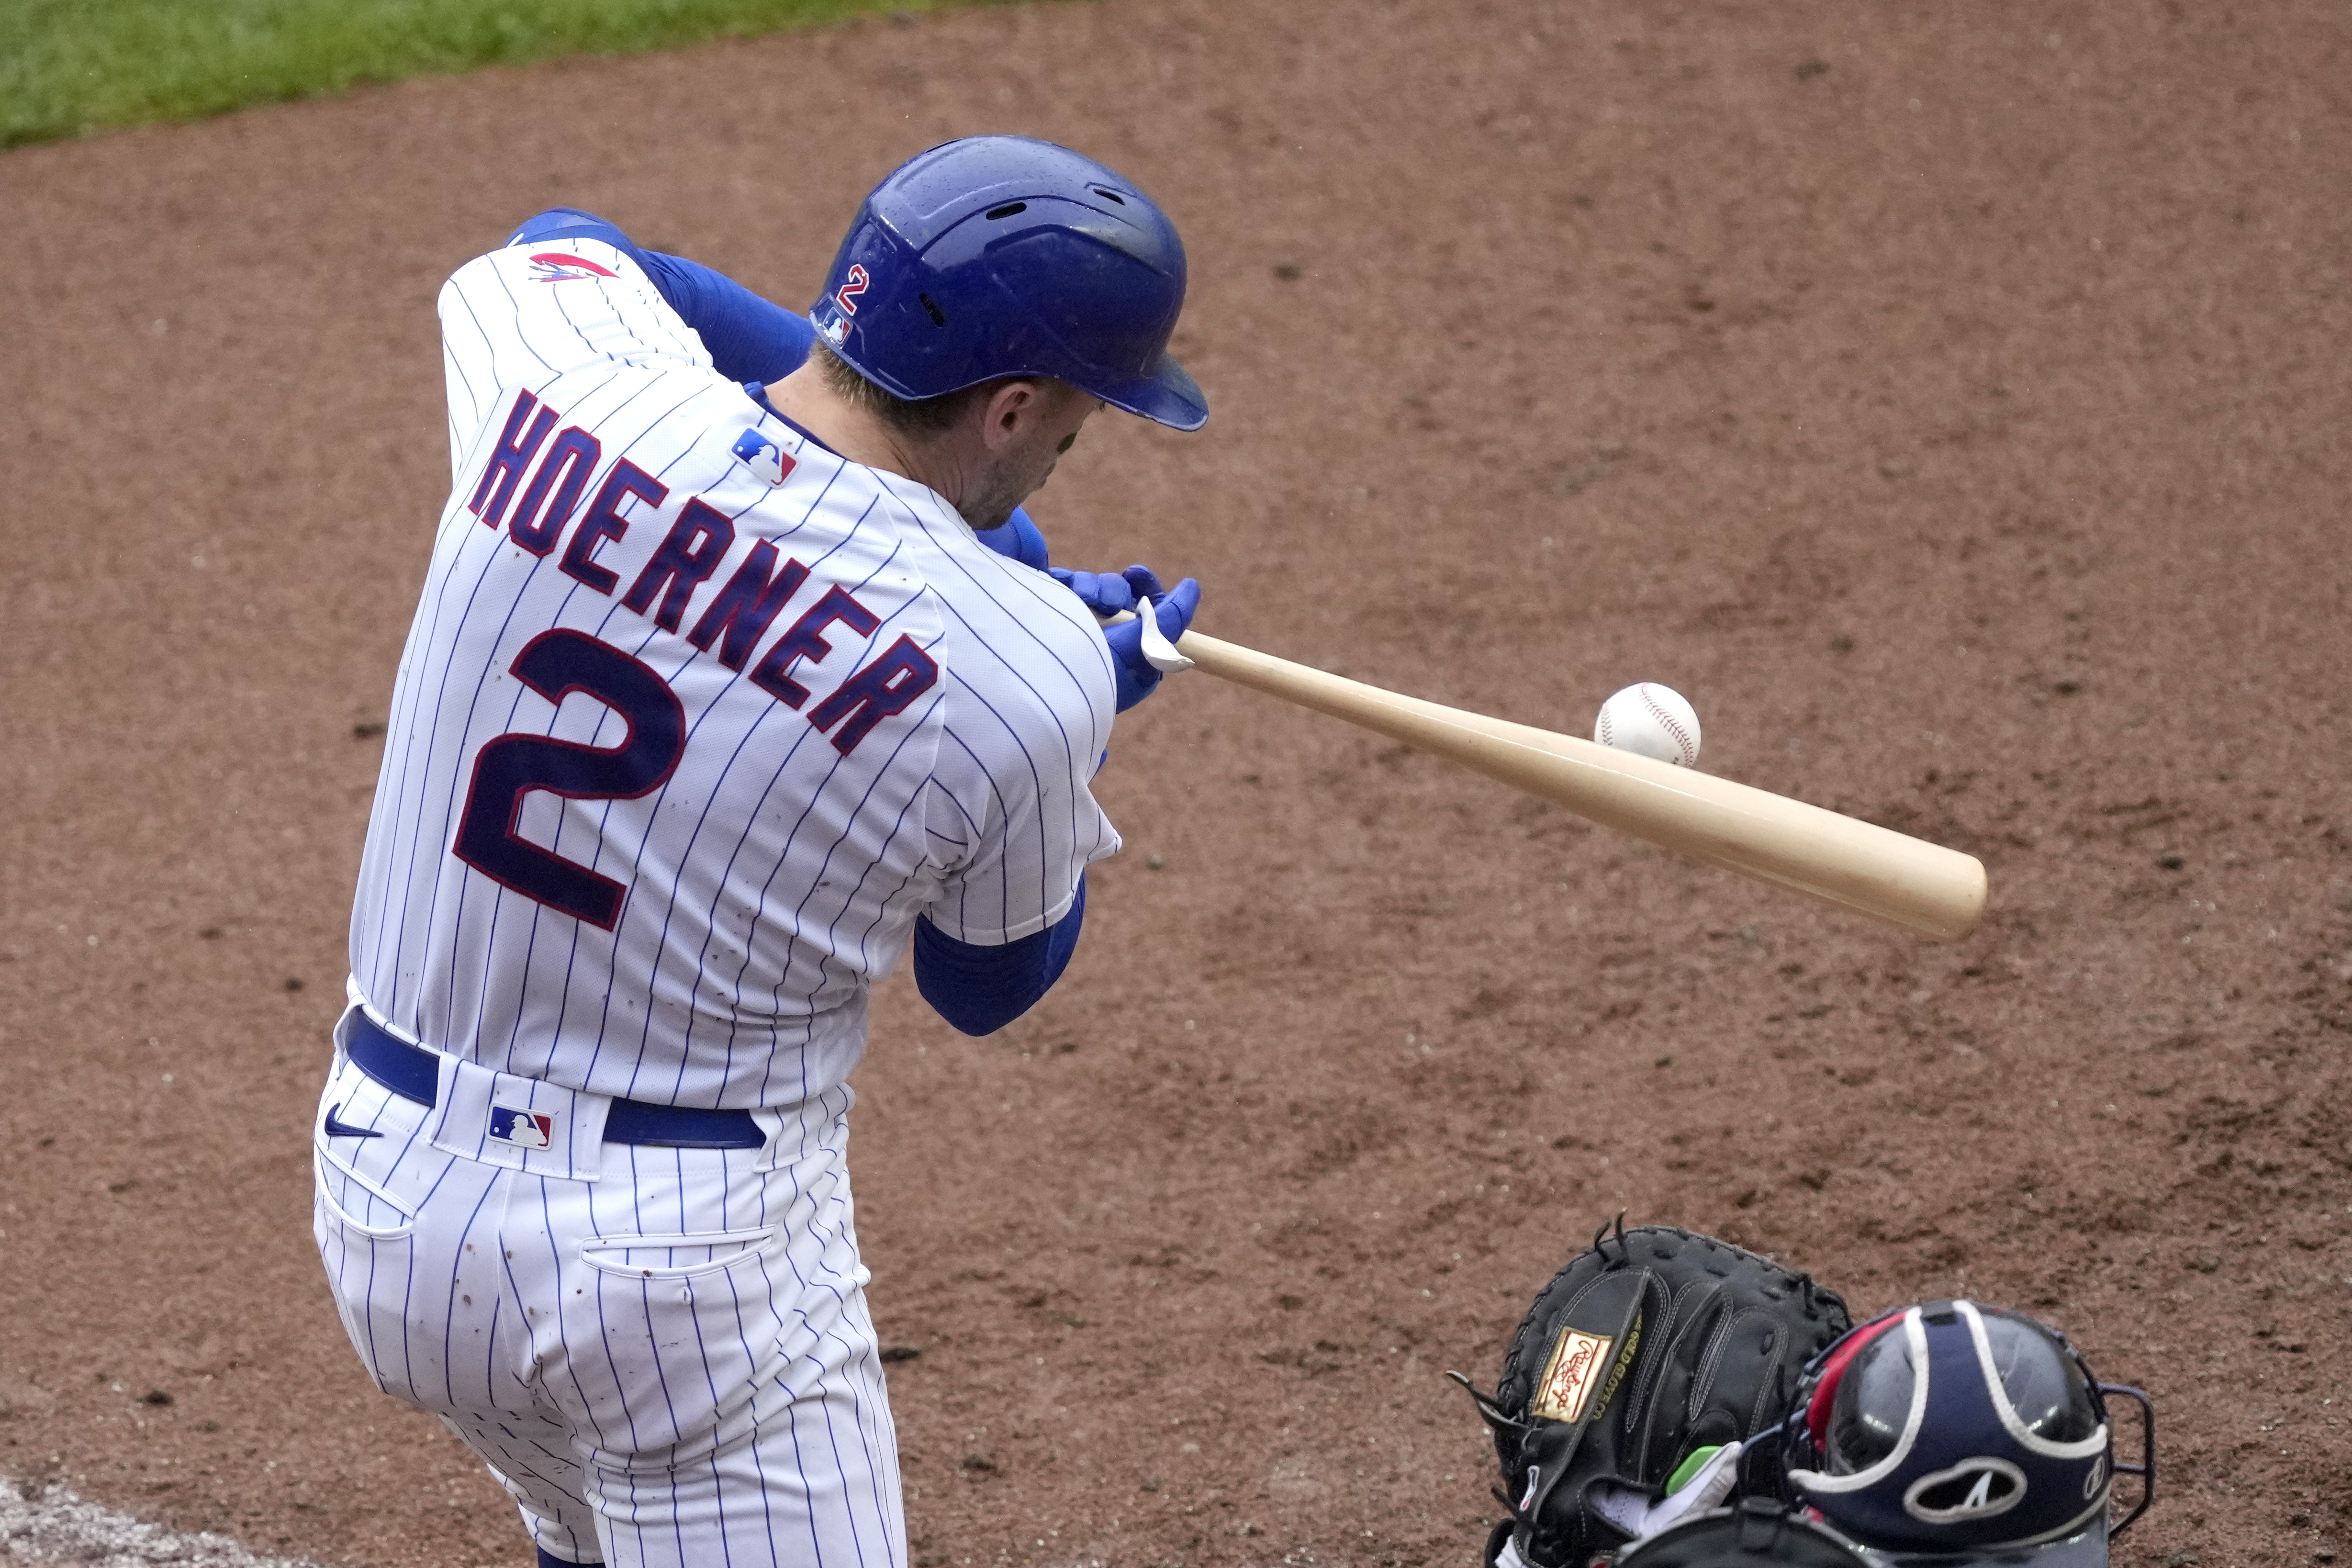 Chicago Cubs: Is infielder Nico Hoerner's health a concern?